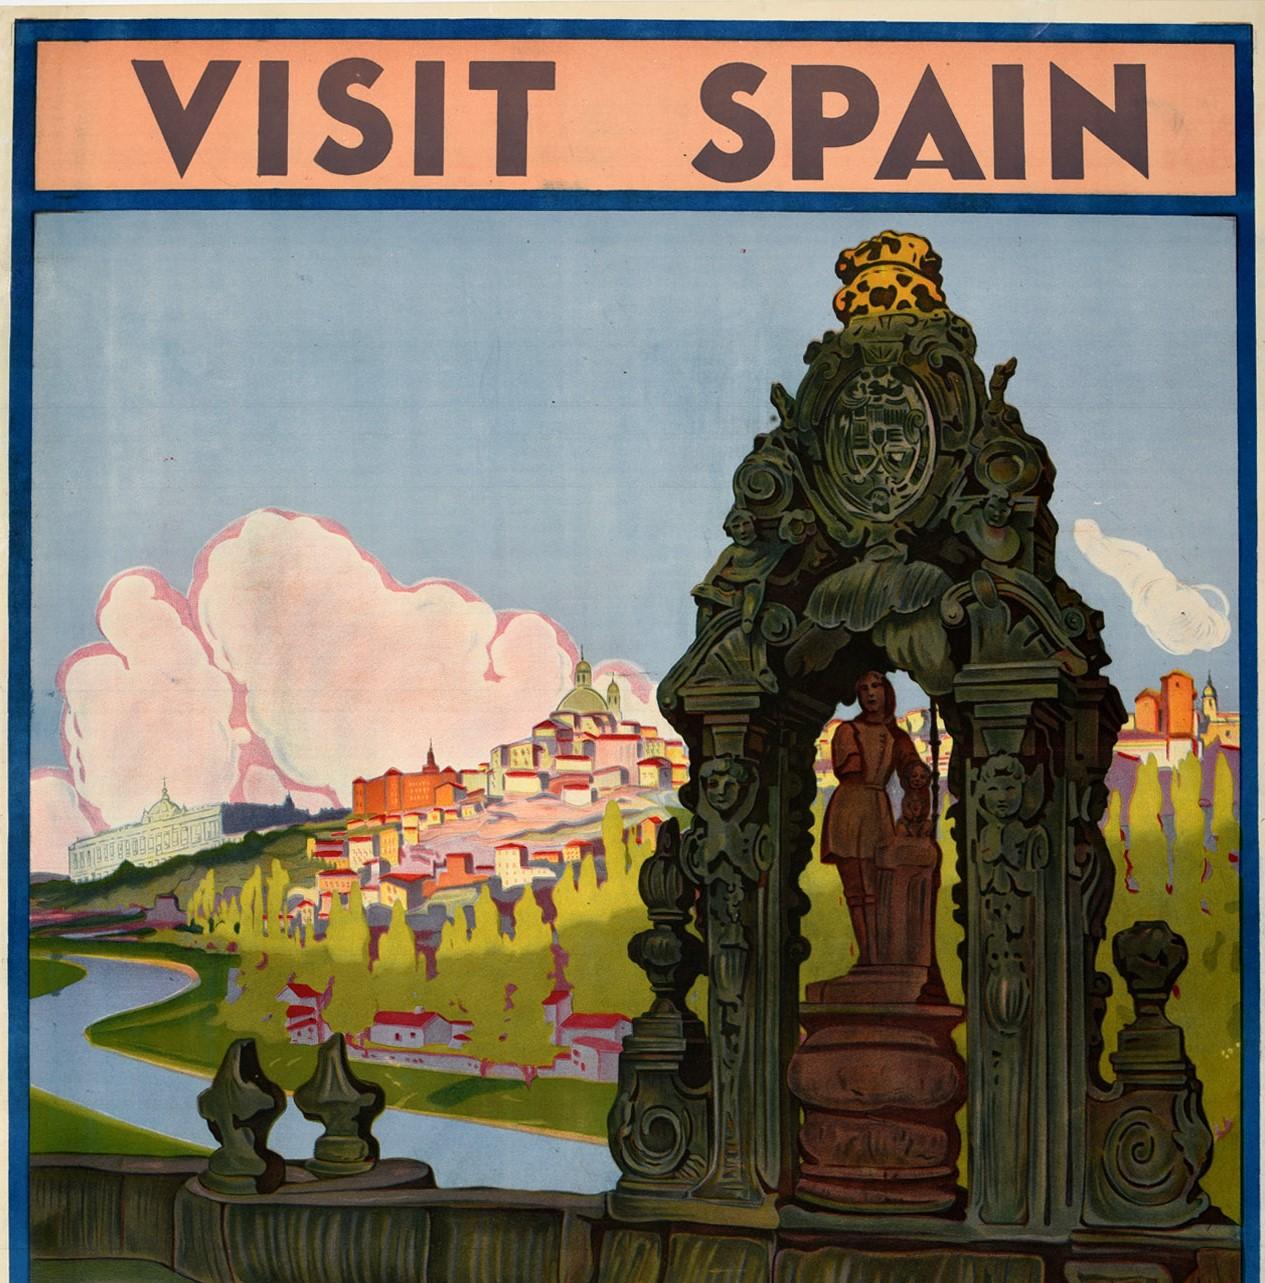 Original Vintage Travel Poster Visit Spain Madrid Court Of Kings Toledo Bridge - Print by Robledano